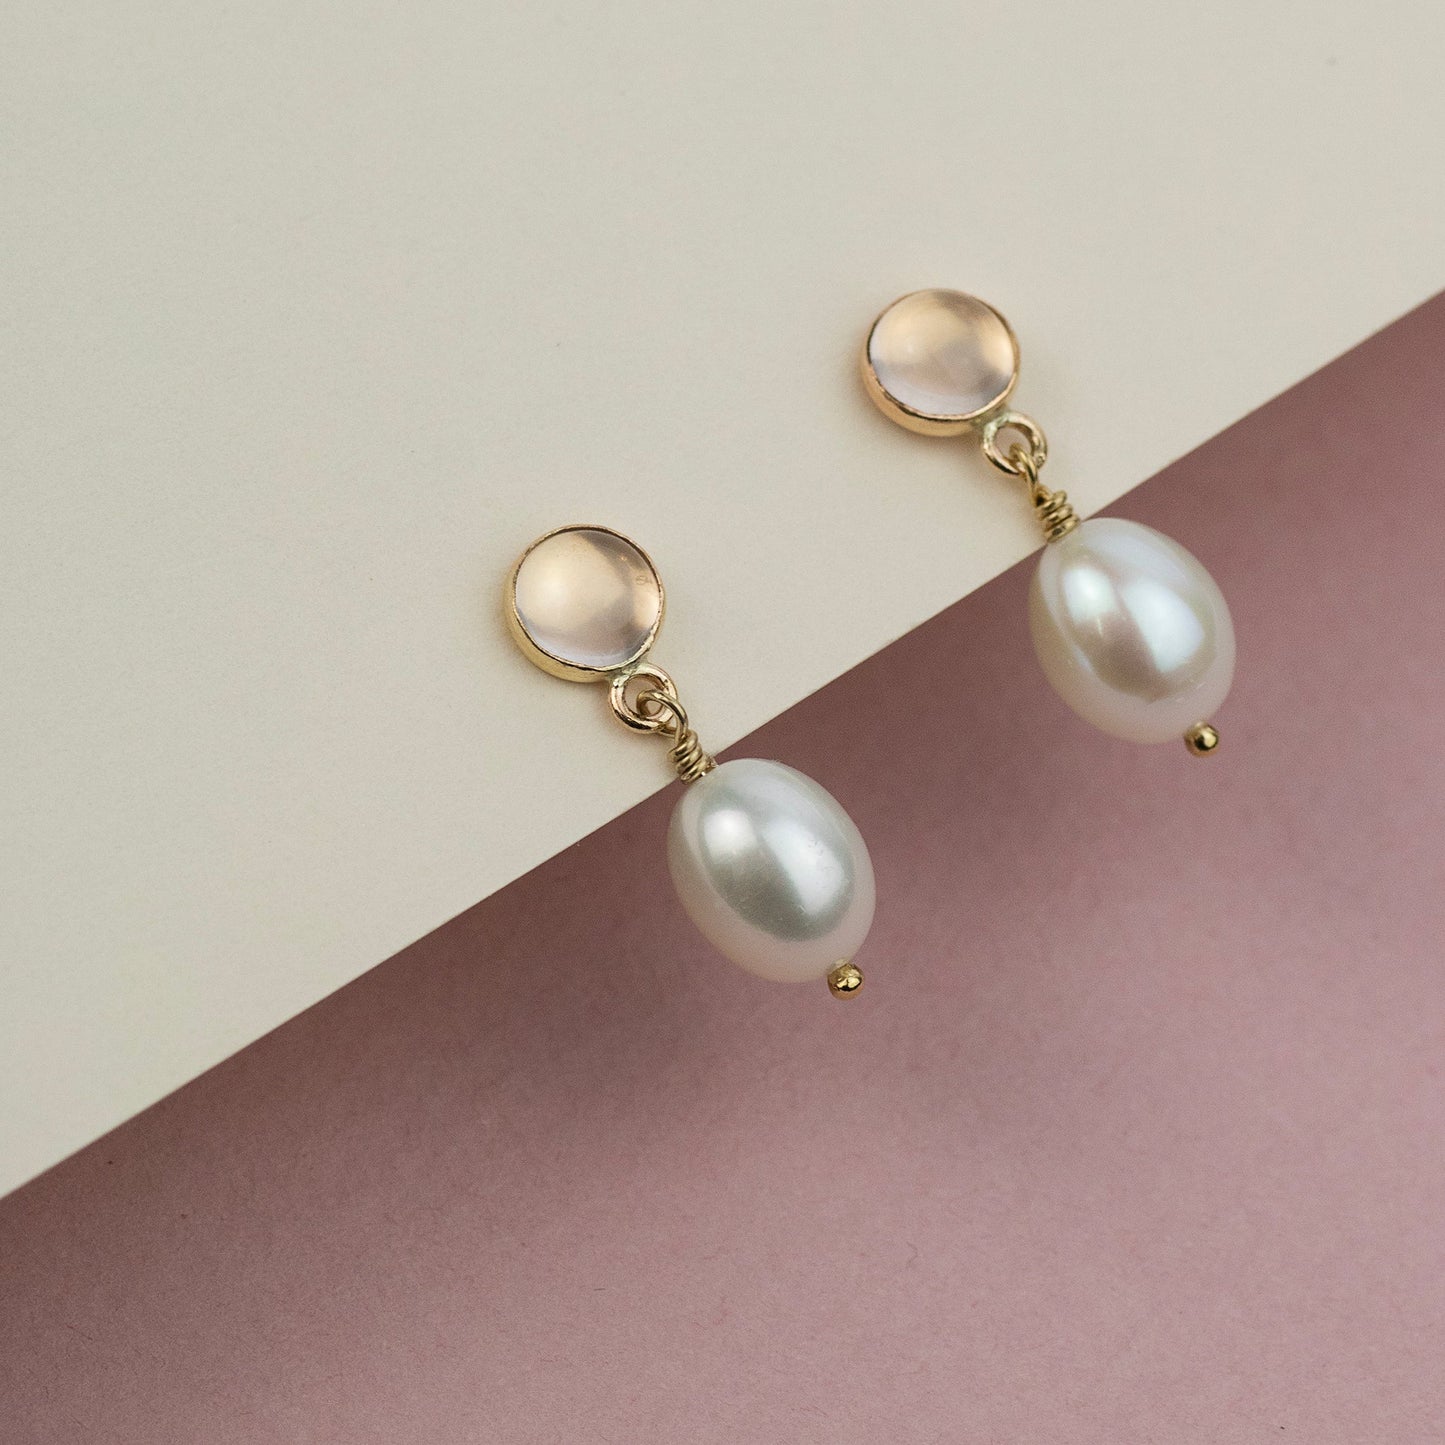 Rose quartz and pearl earrings